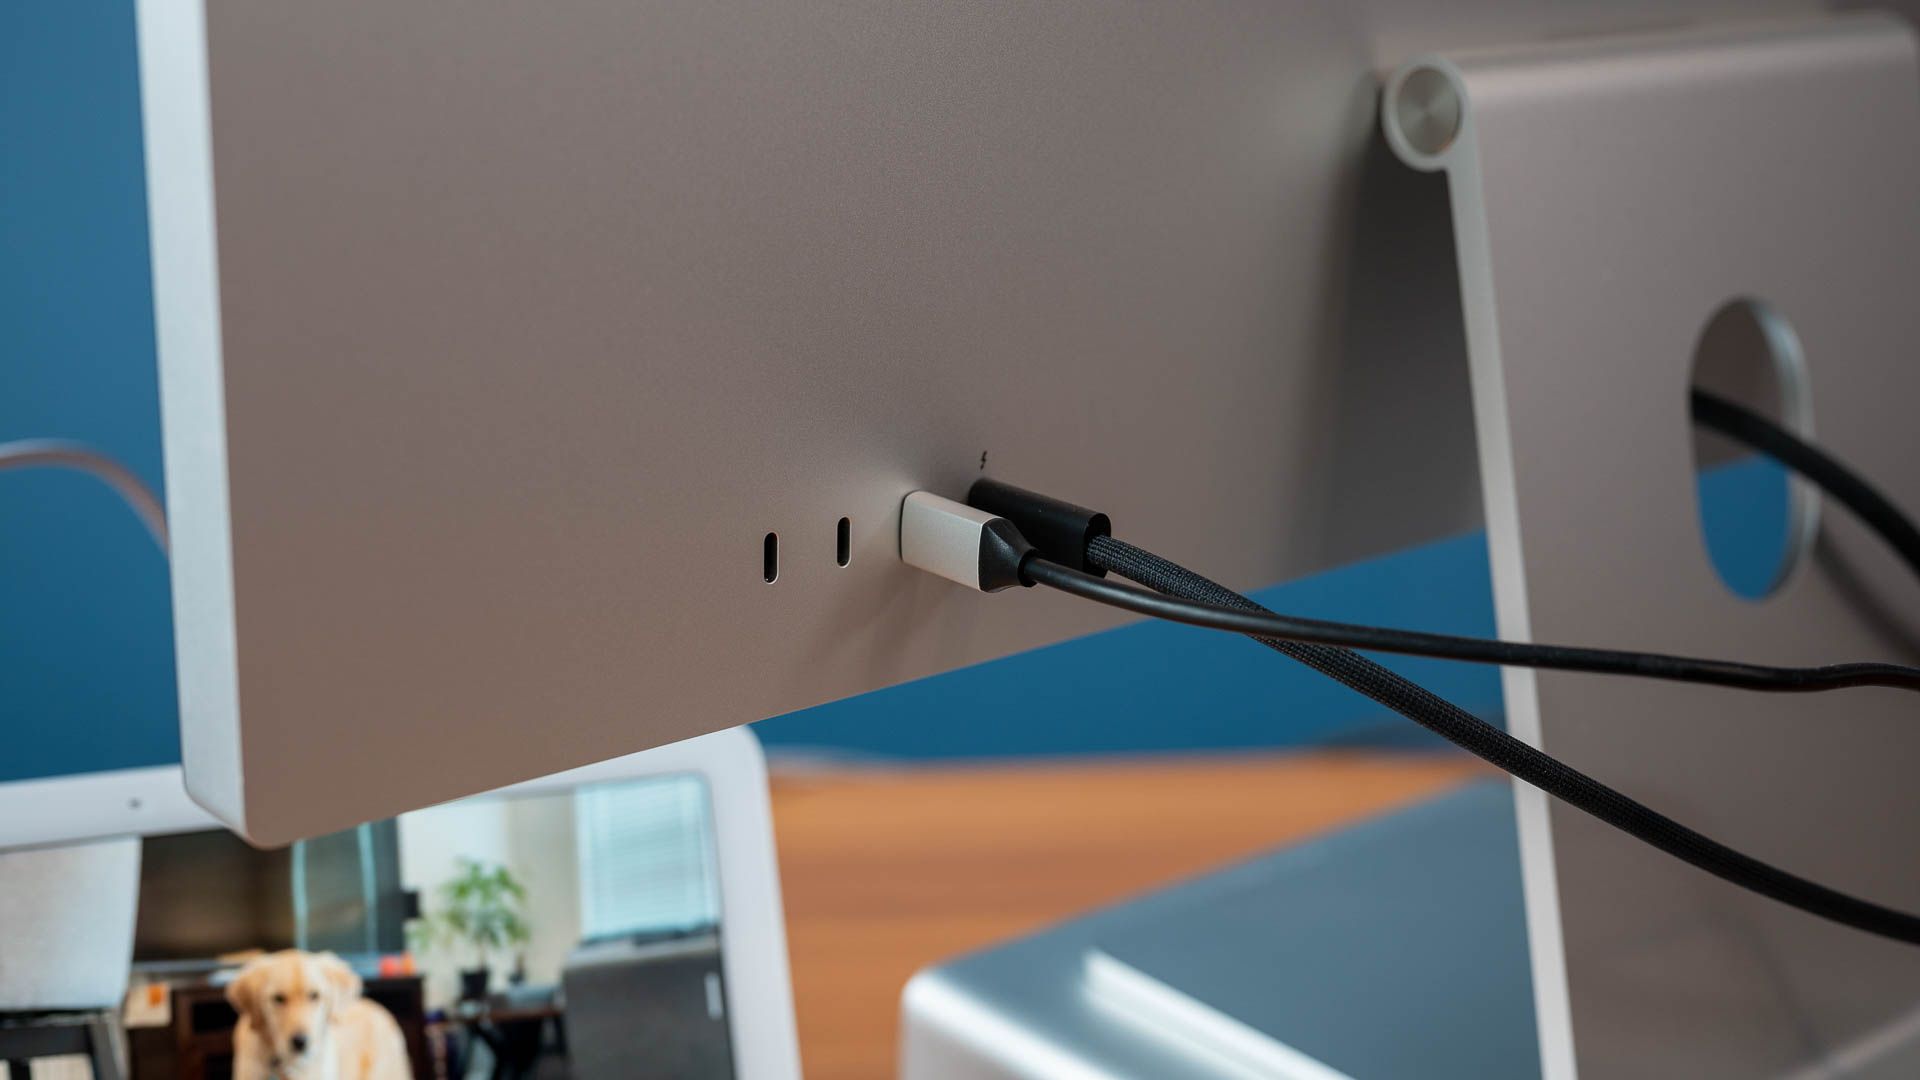 Satechi Type-C Monitor Stand Hub plugged into an Apple Studio Display